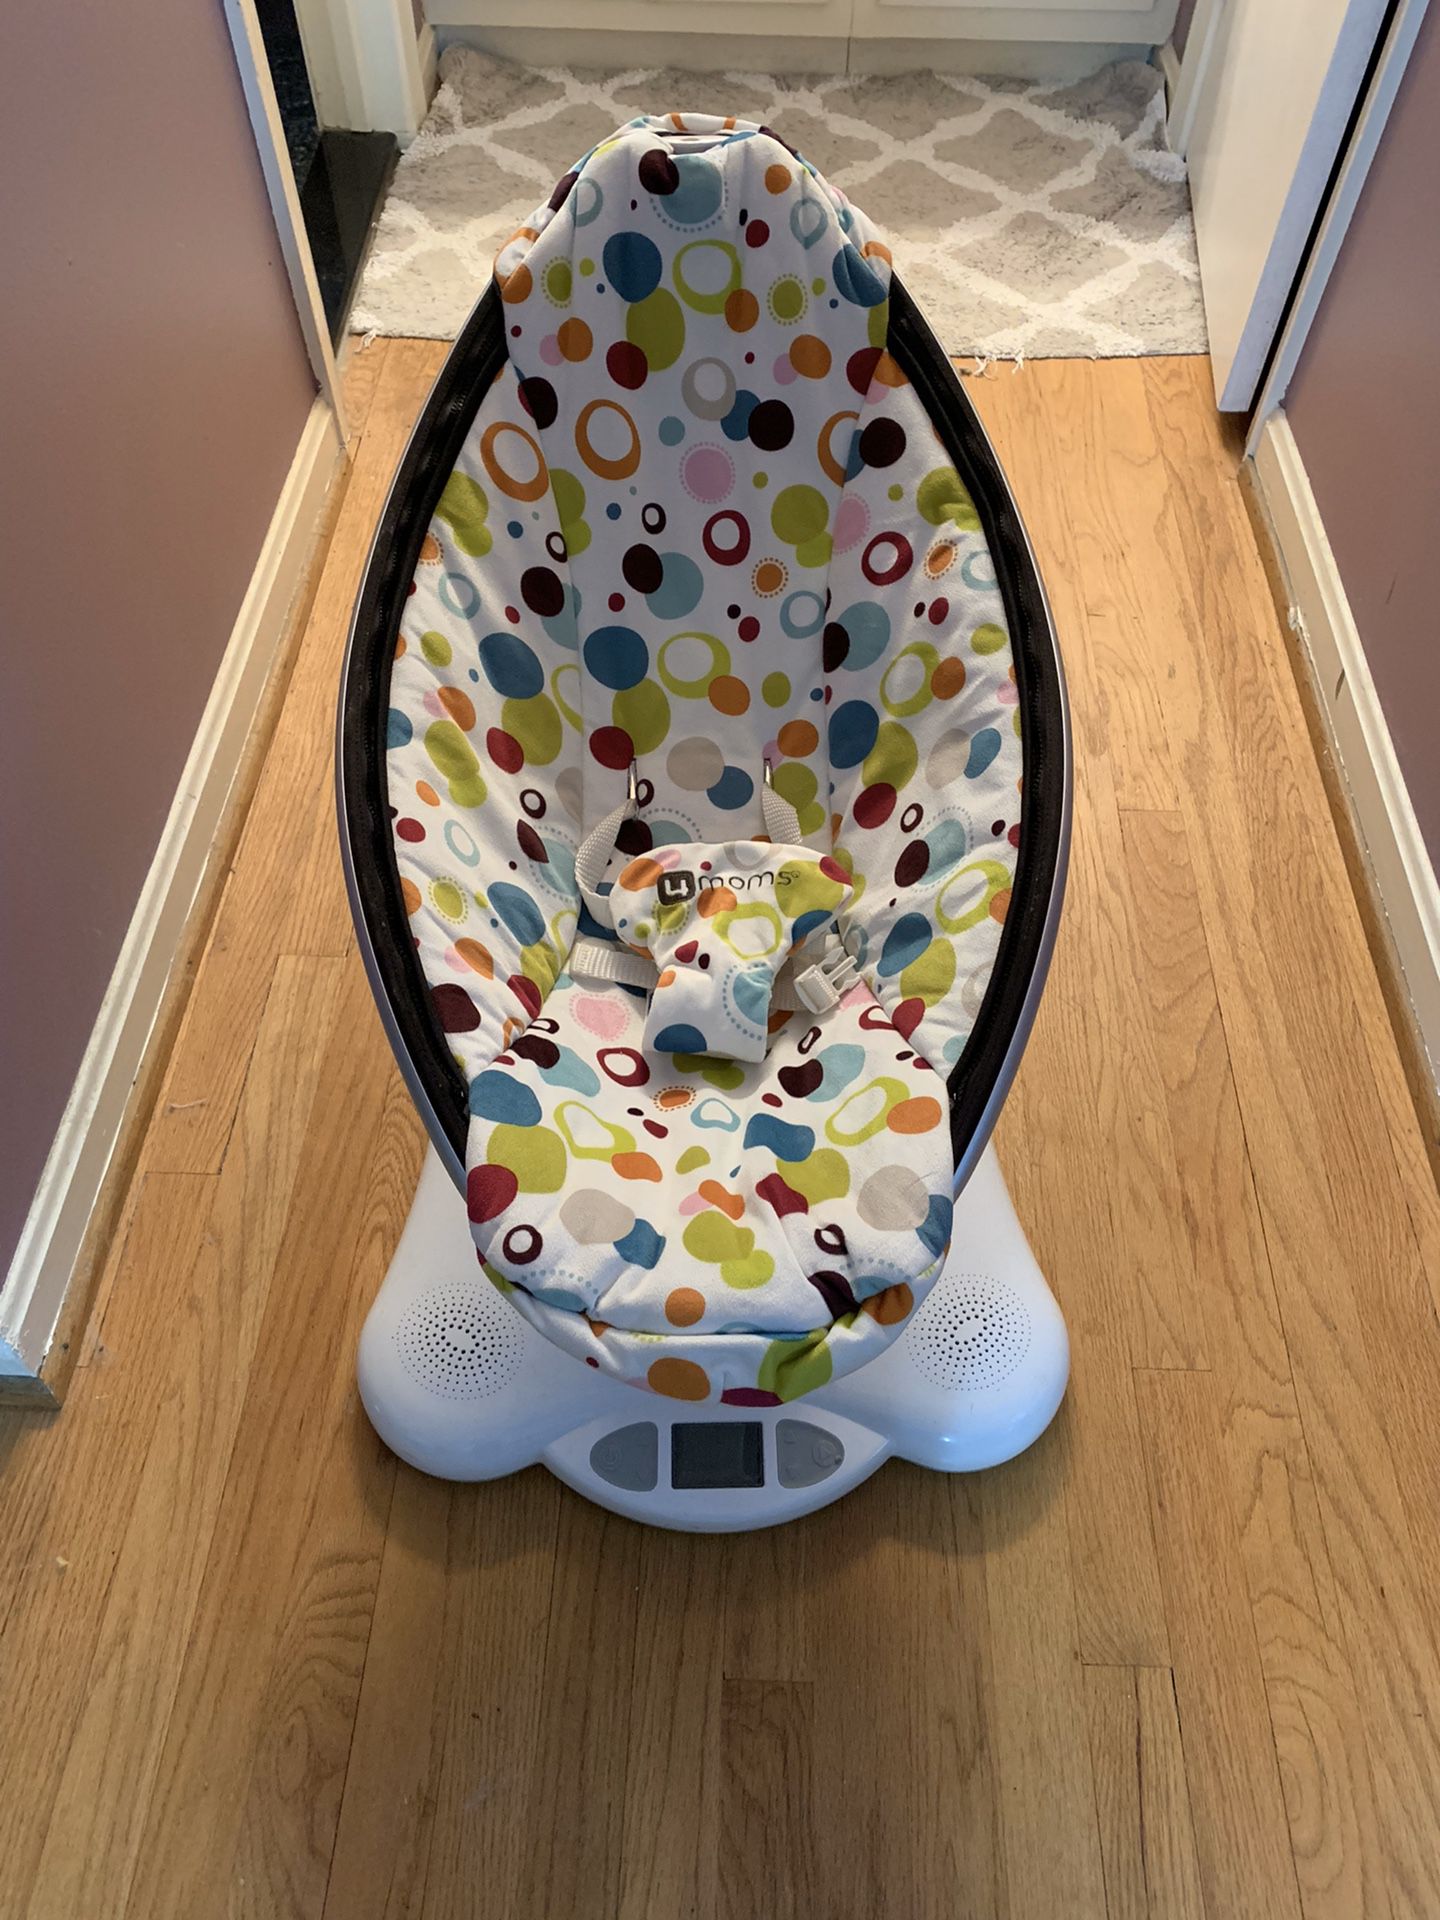 4moms MamaRoo infant seat